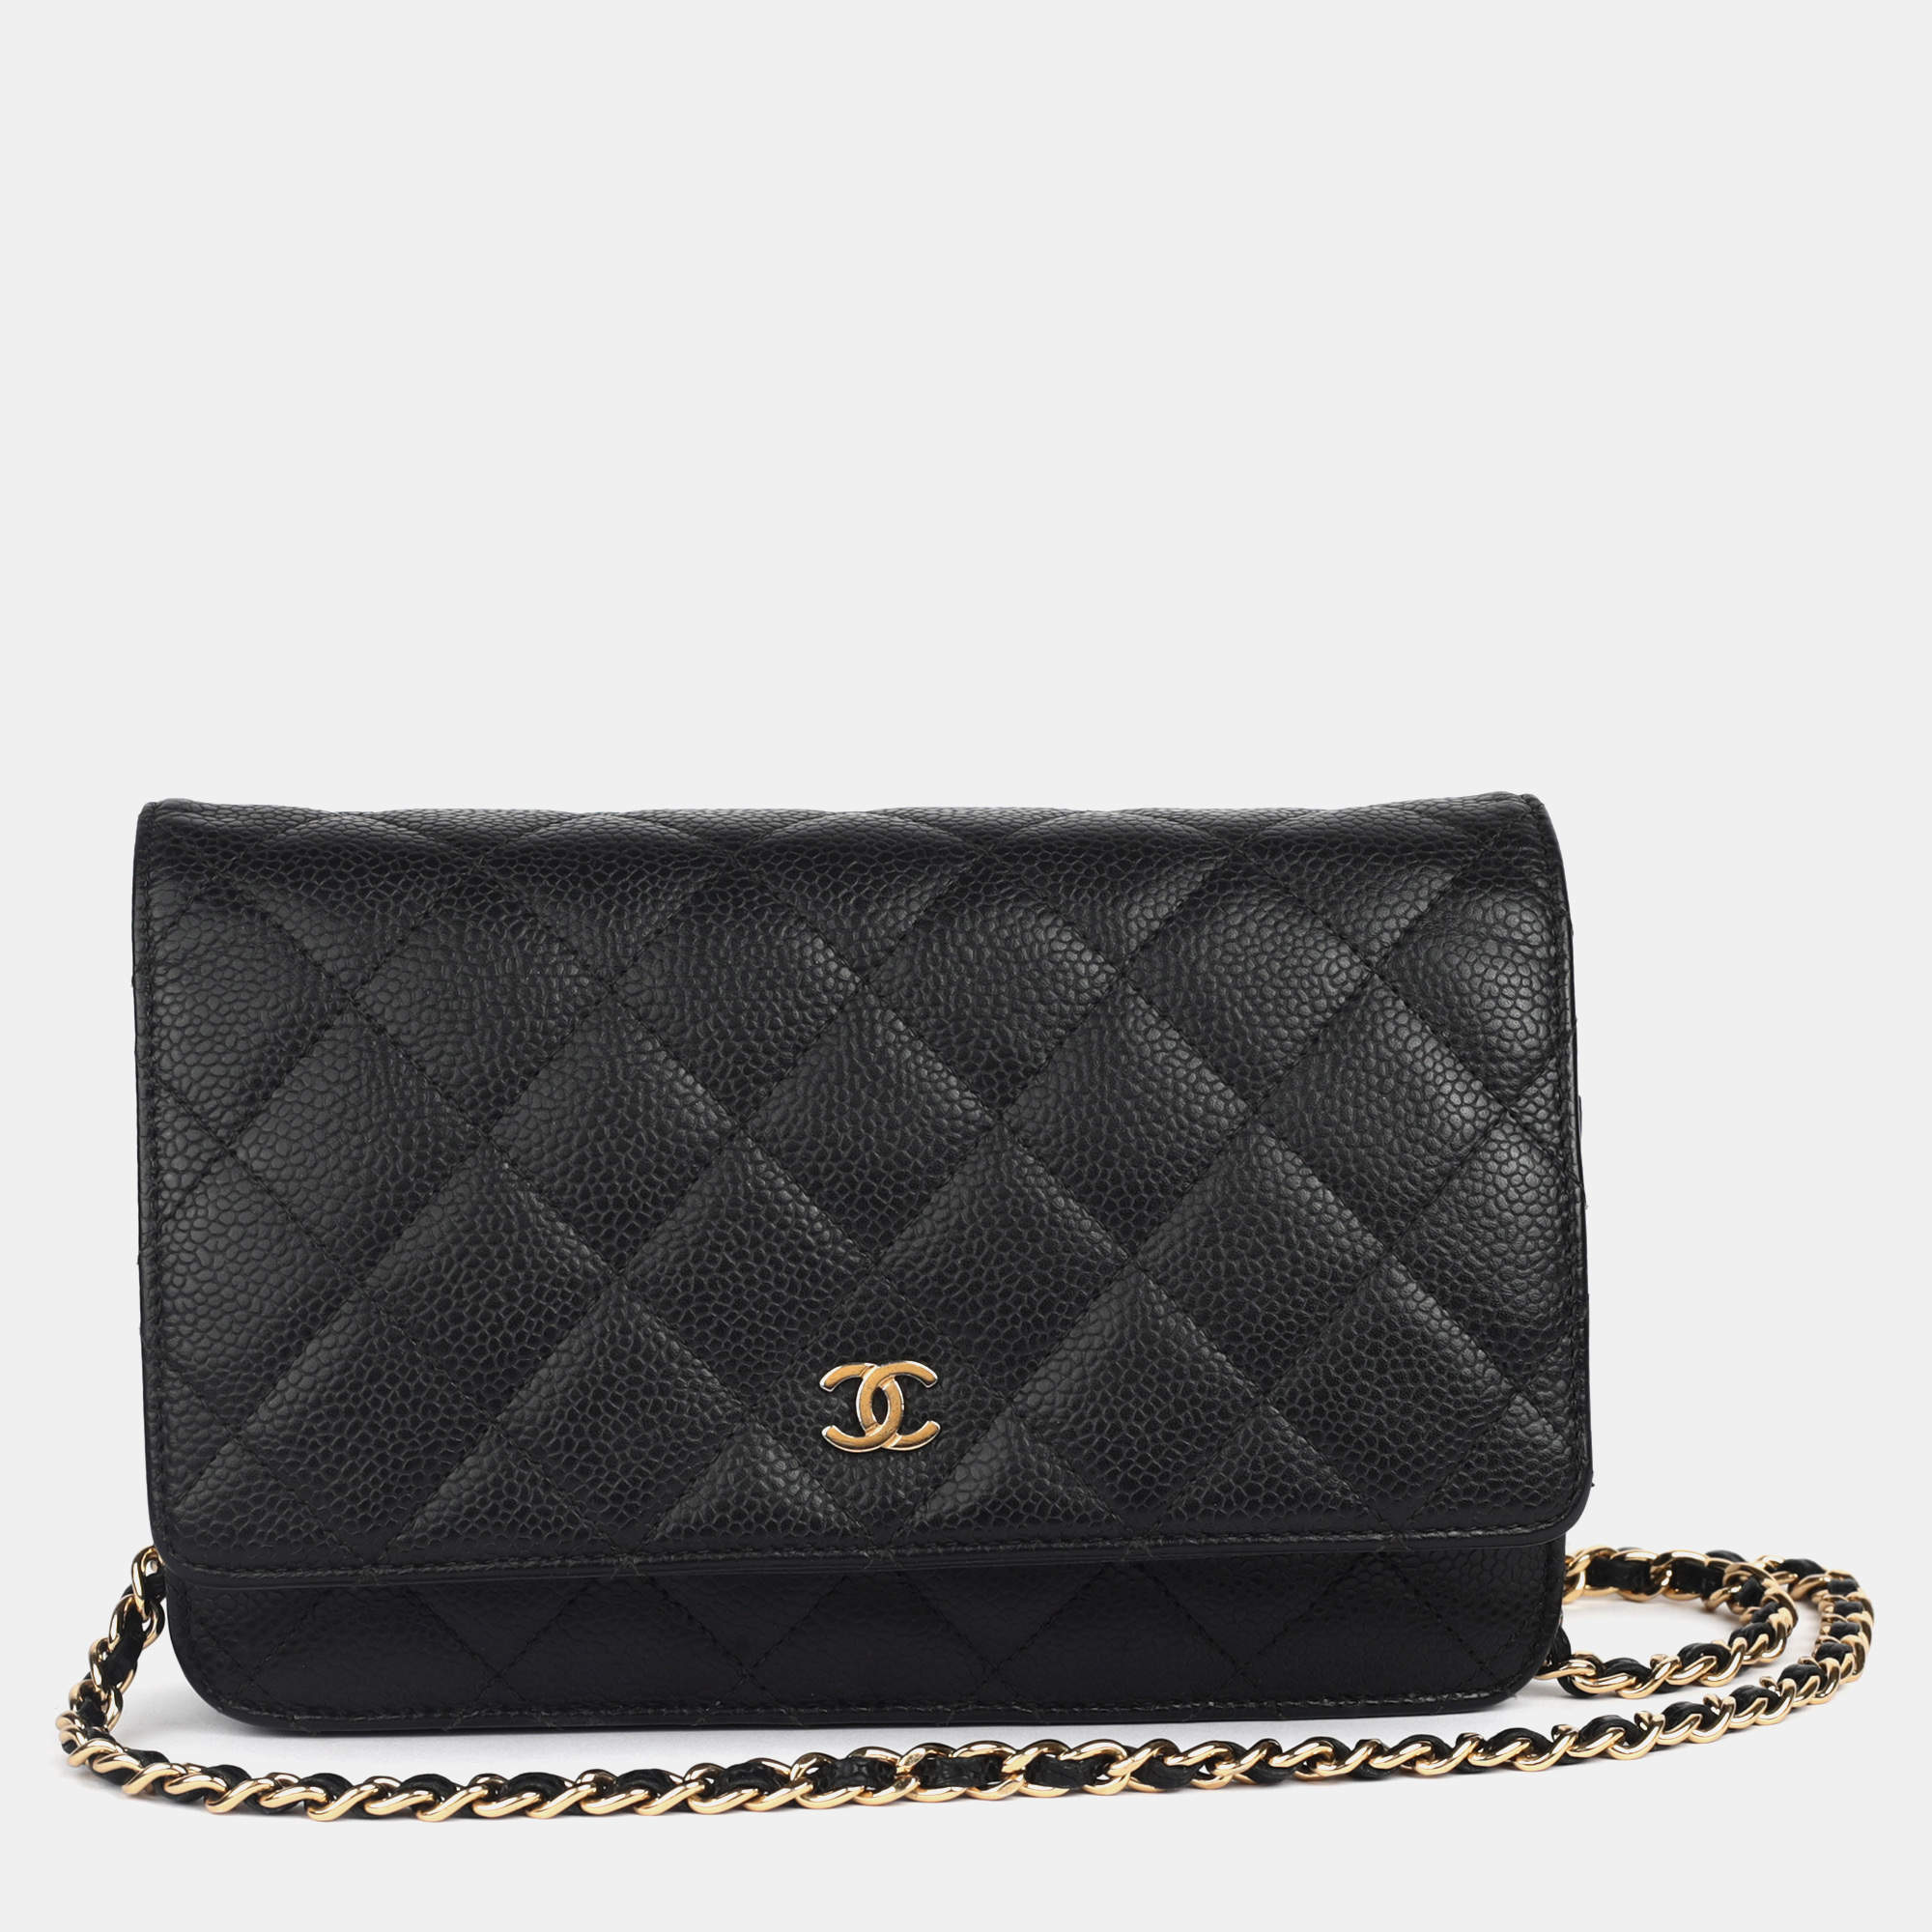 Chanel Black Caviar Leather Classic WOC Bag